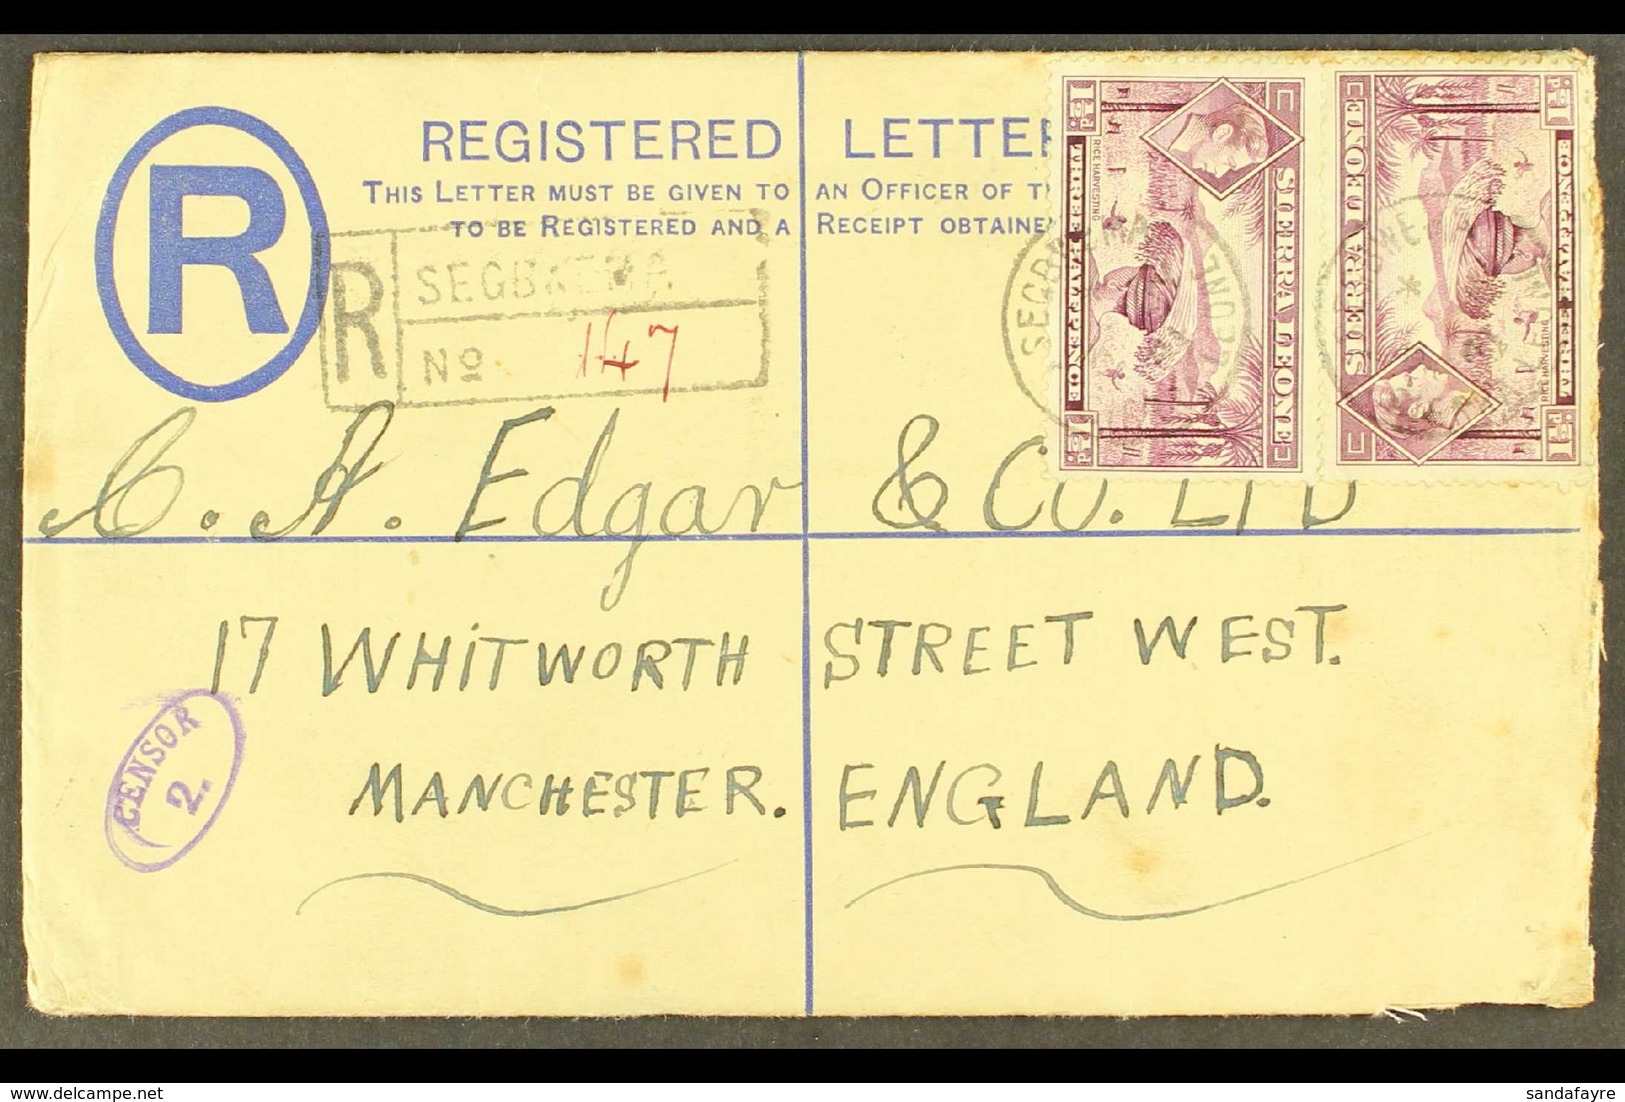 1941 (July) KGVI 3d Registered Envelope With Additional 1½d Pair, Segbwema To England, Fine Oval Violet "CENSOR 2.", Att - Sierra Leone (...-1960)